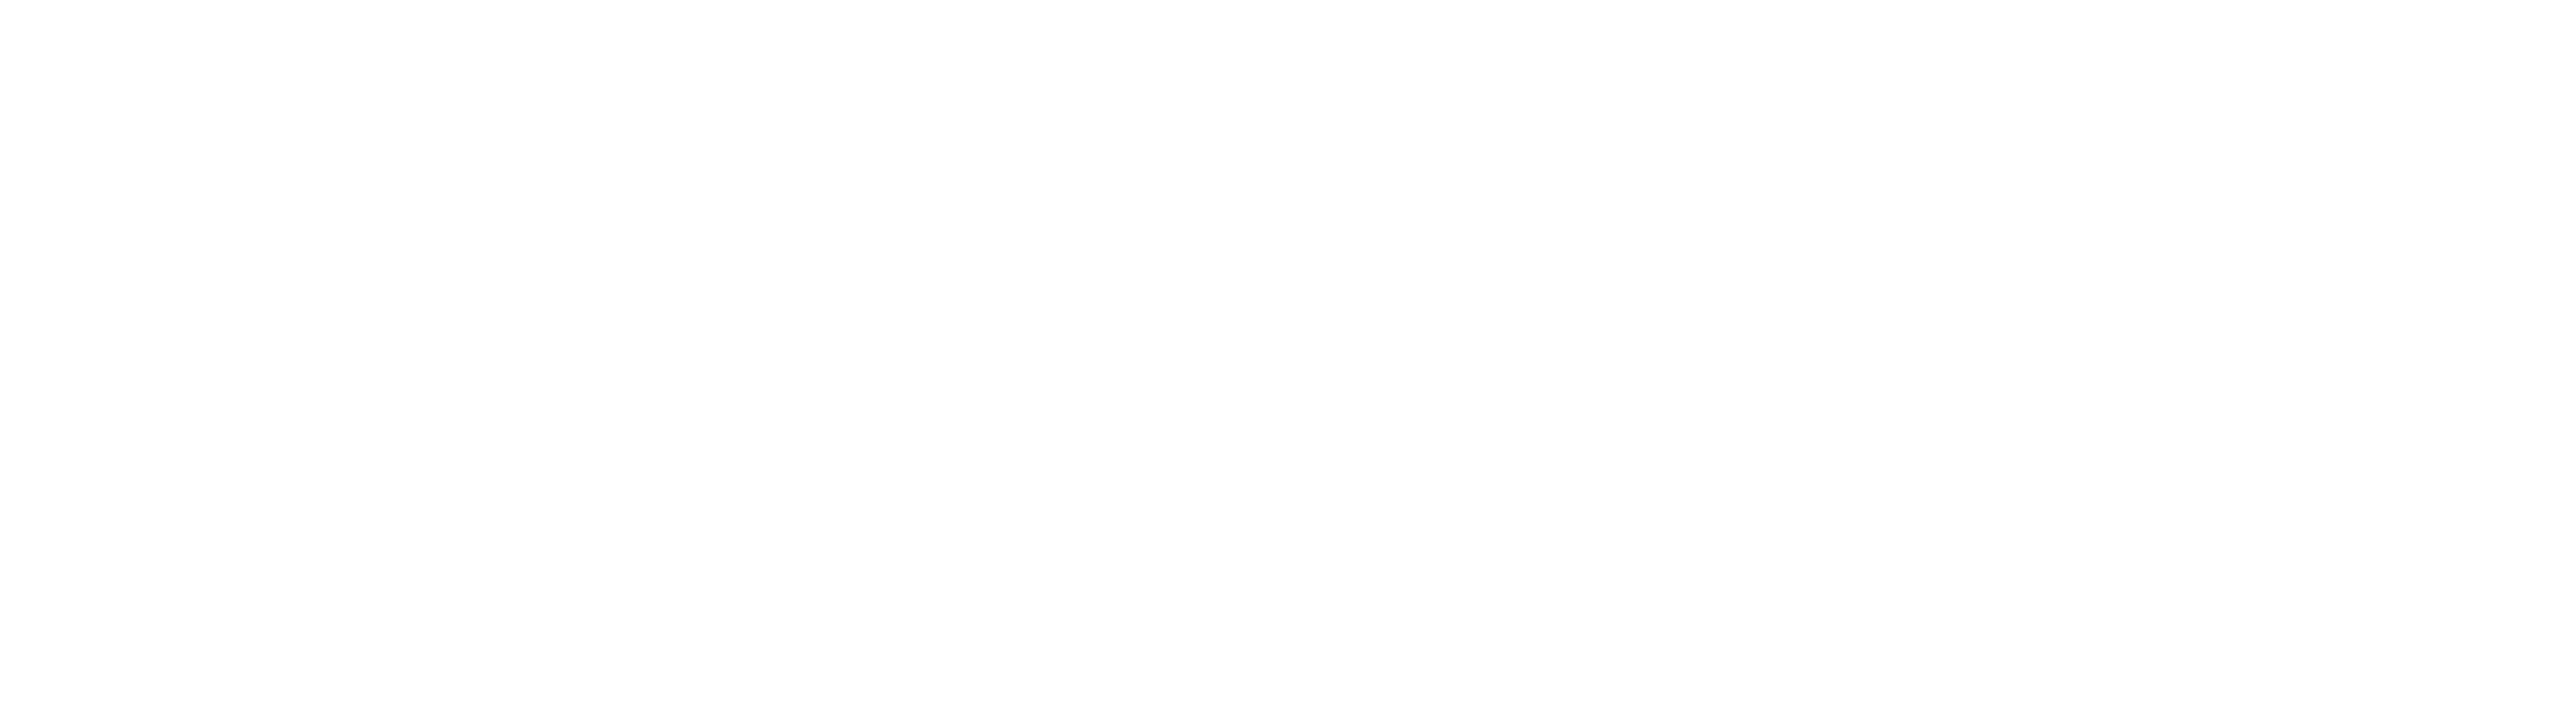 Charlie Wilson's War logo